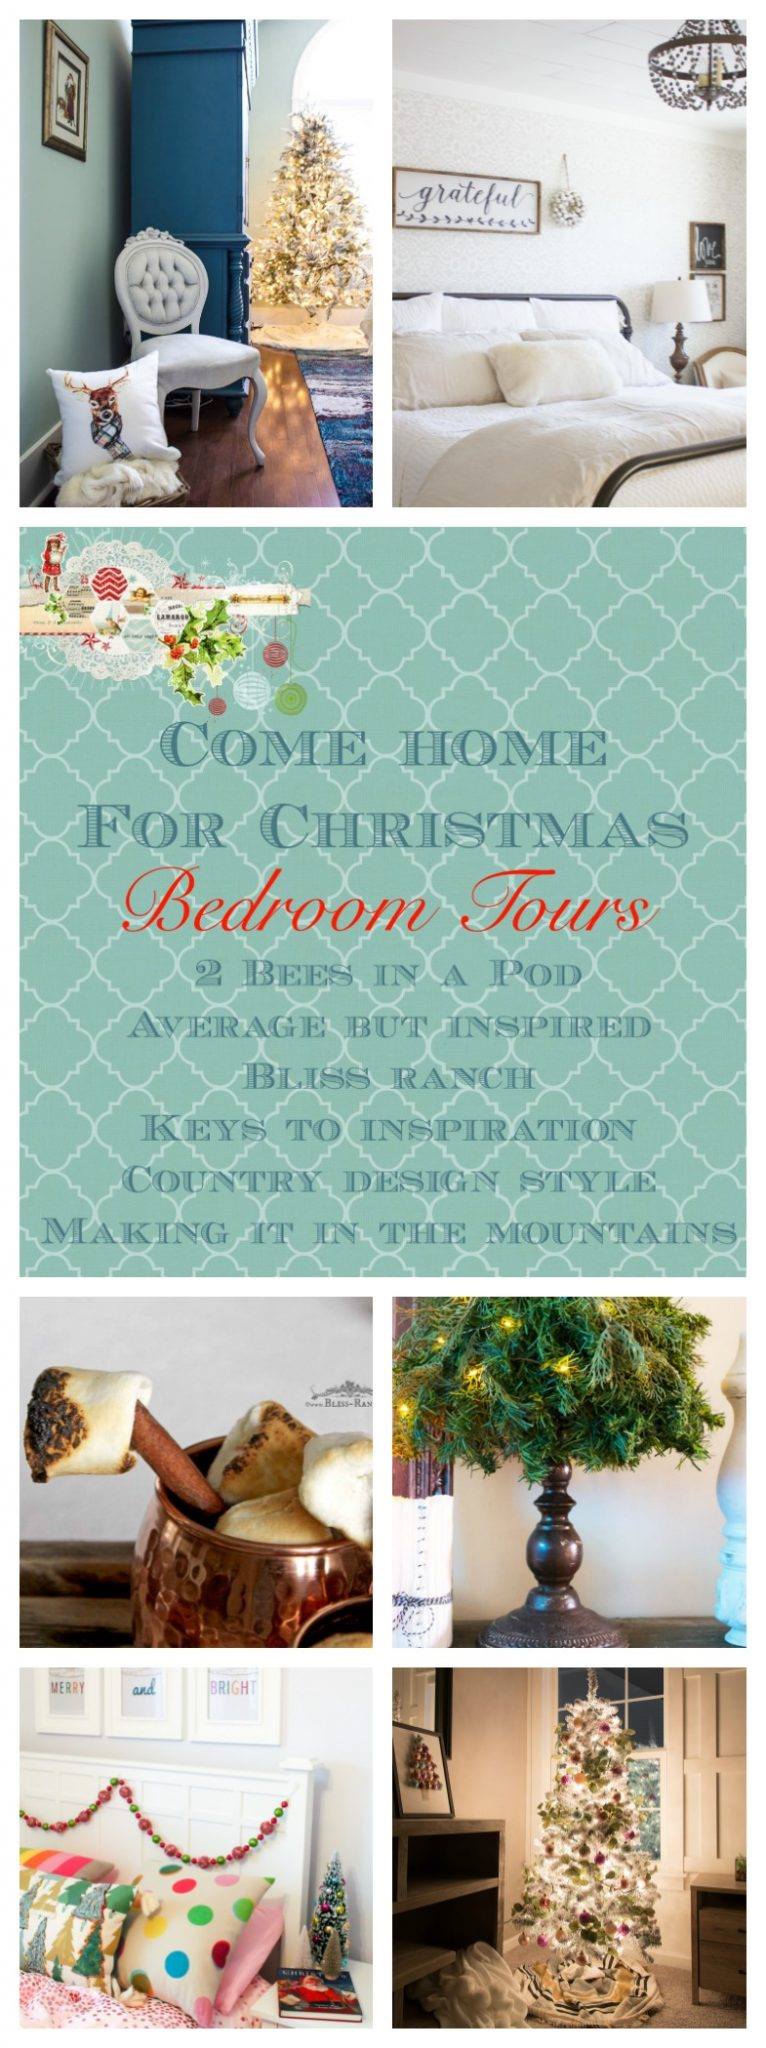 Come home for Christmas Bedroom